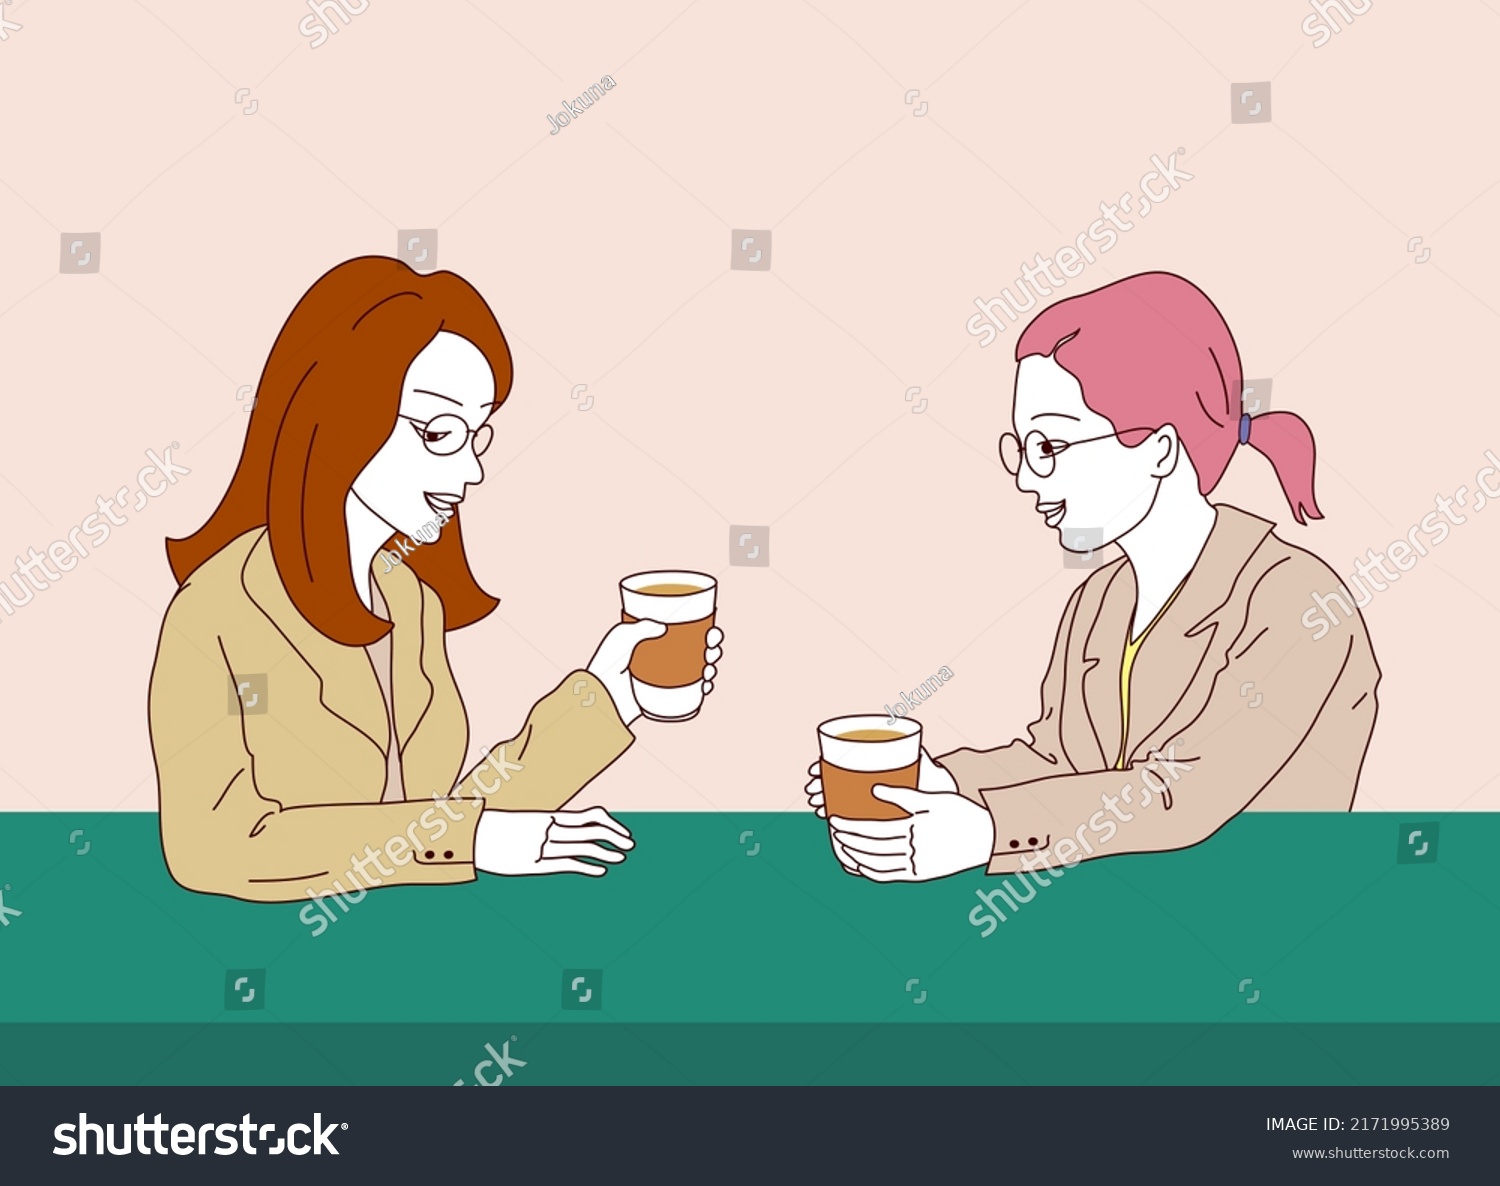 Vector Illustration Two Women Wearing Glasses Stock Vector Royalty Free 2171995389 Shutterstock